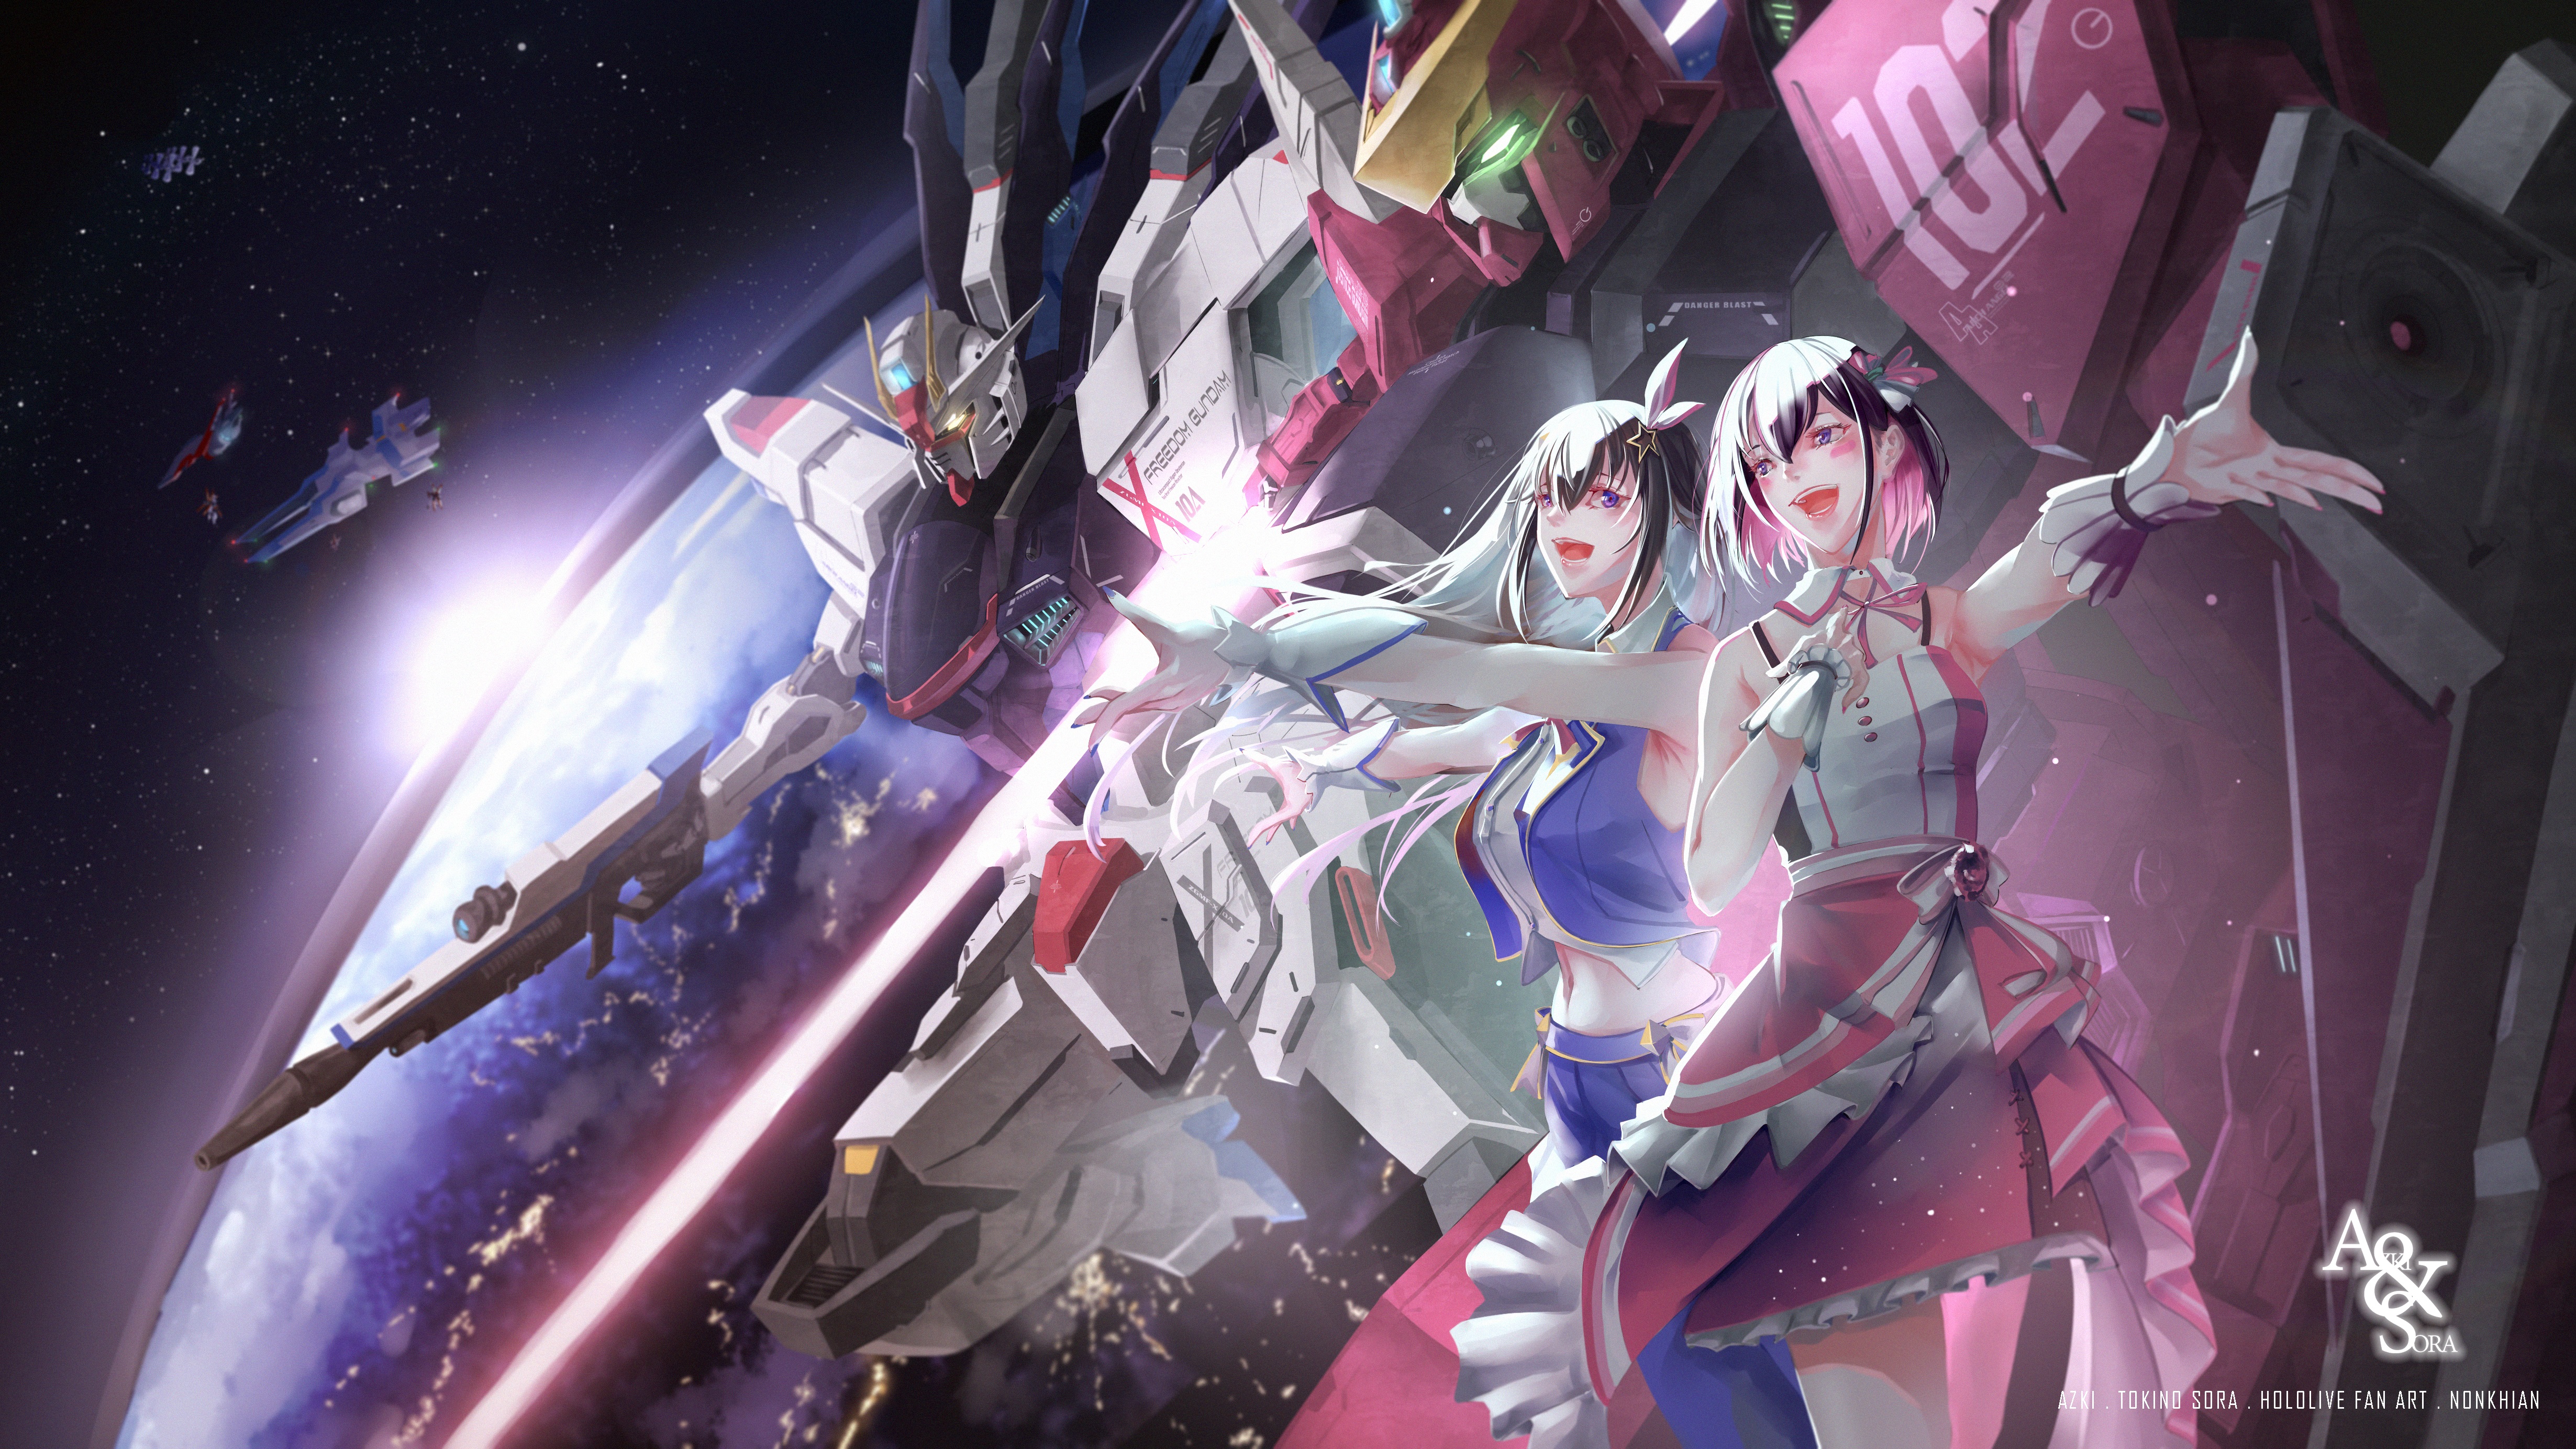 Anime Anime Girls Virtual Youtuber AZKi Tokino Sora Crossover Mobile Suit Gundam SEED Mechs Super Ro 4920x2768